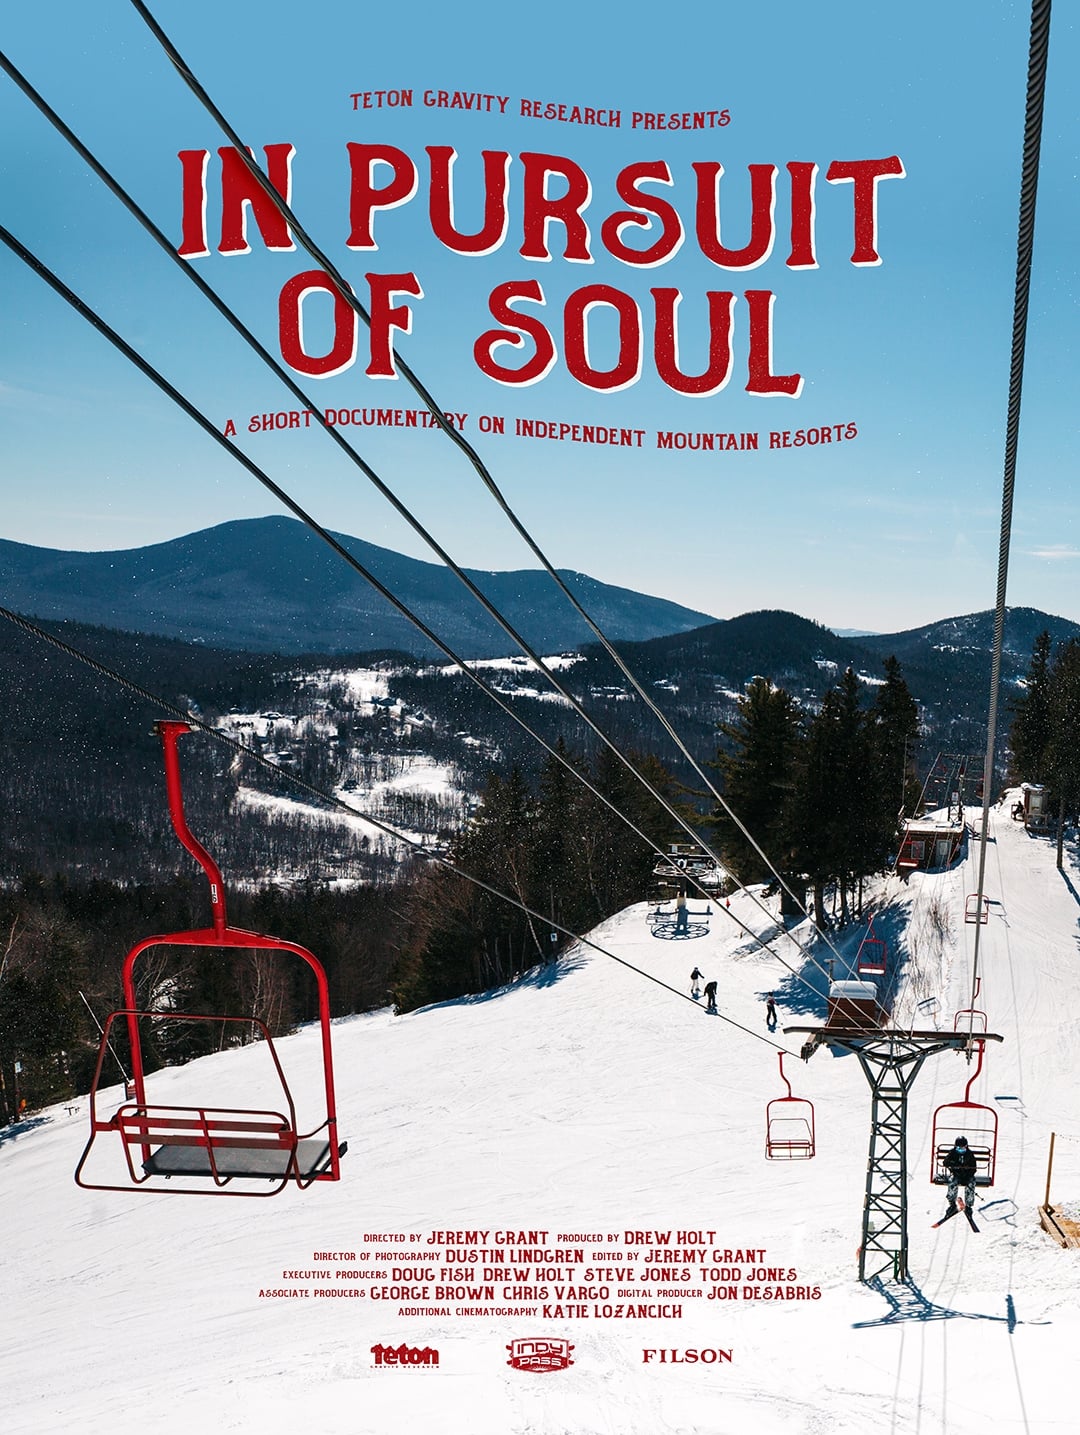 In Pursuit of Soul